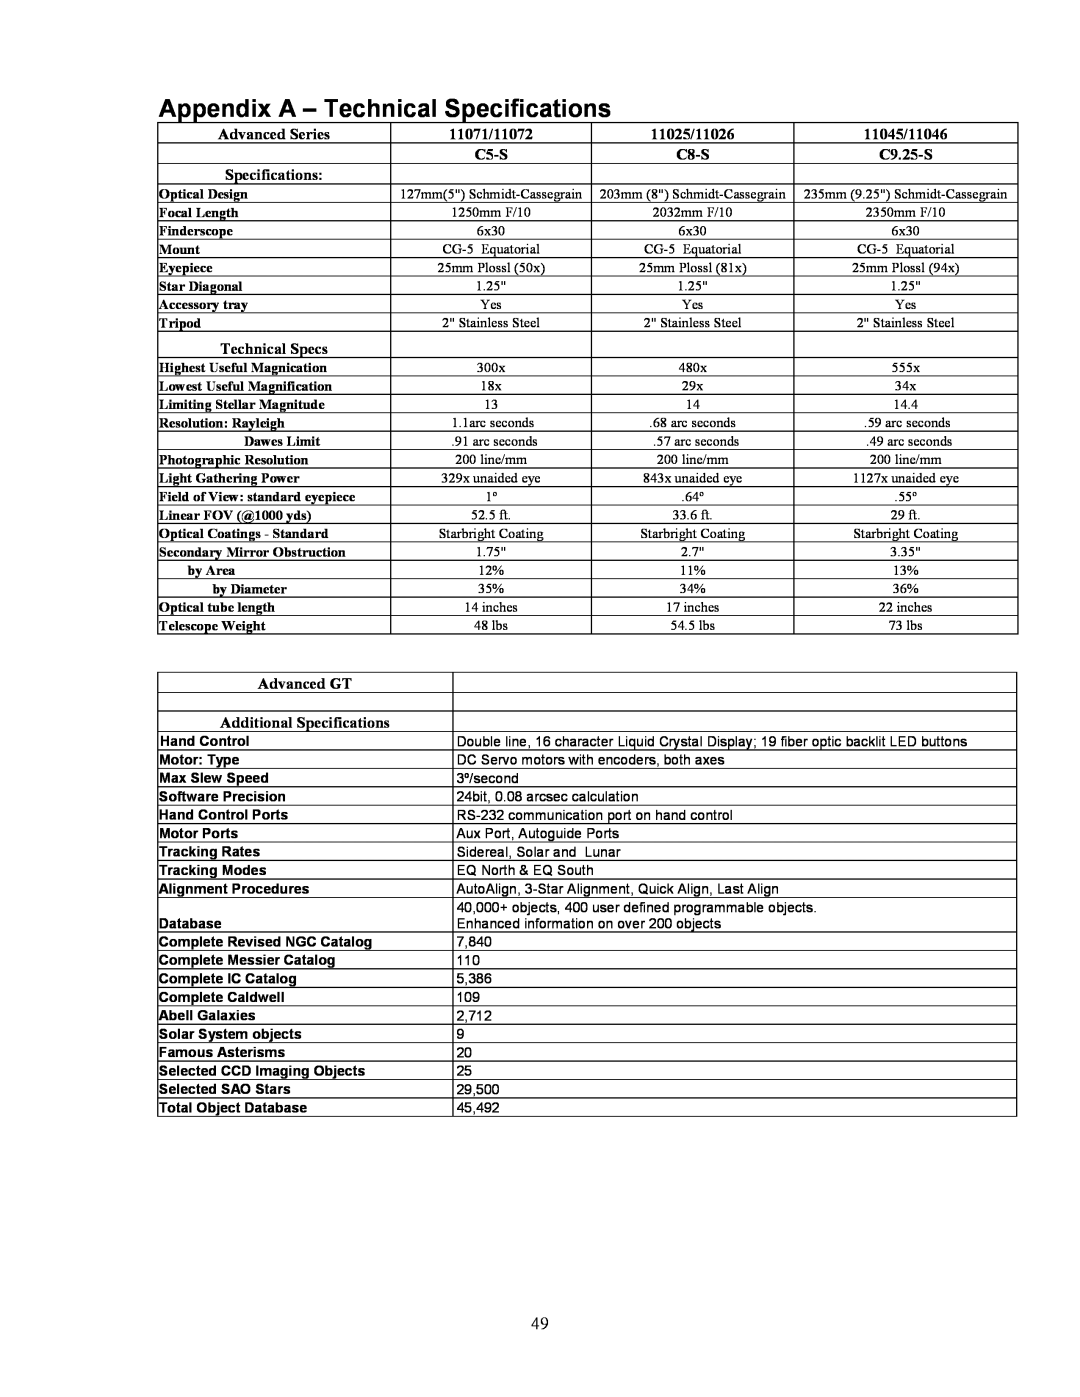 Celestron C5-S Appendix A - Technical Specifications, Advanced Series, 11071/11072, 11025/11026, 11045/11046, Advanced GT 